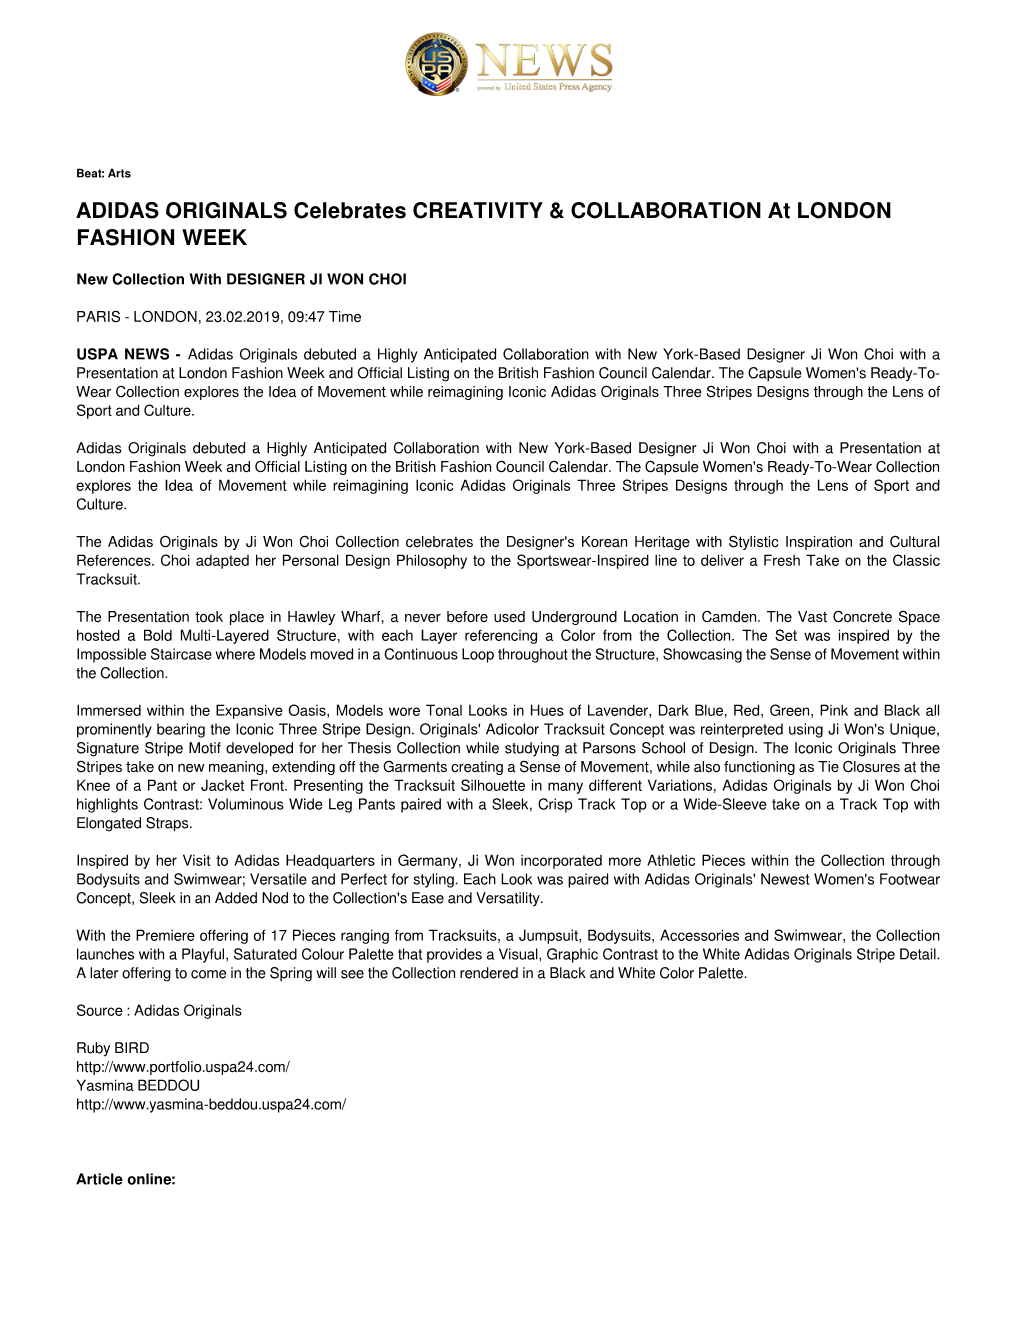 ADIDAS ORIGINALS Celebrates CREATIVITY & COLLABORATION at LONDON FASHION WEEK